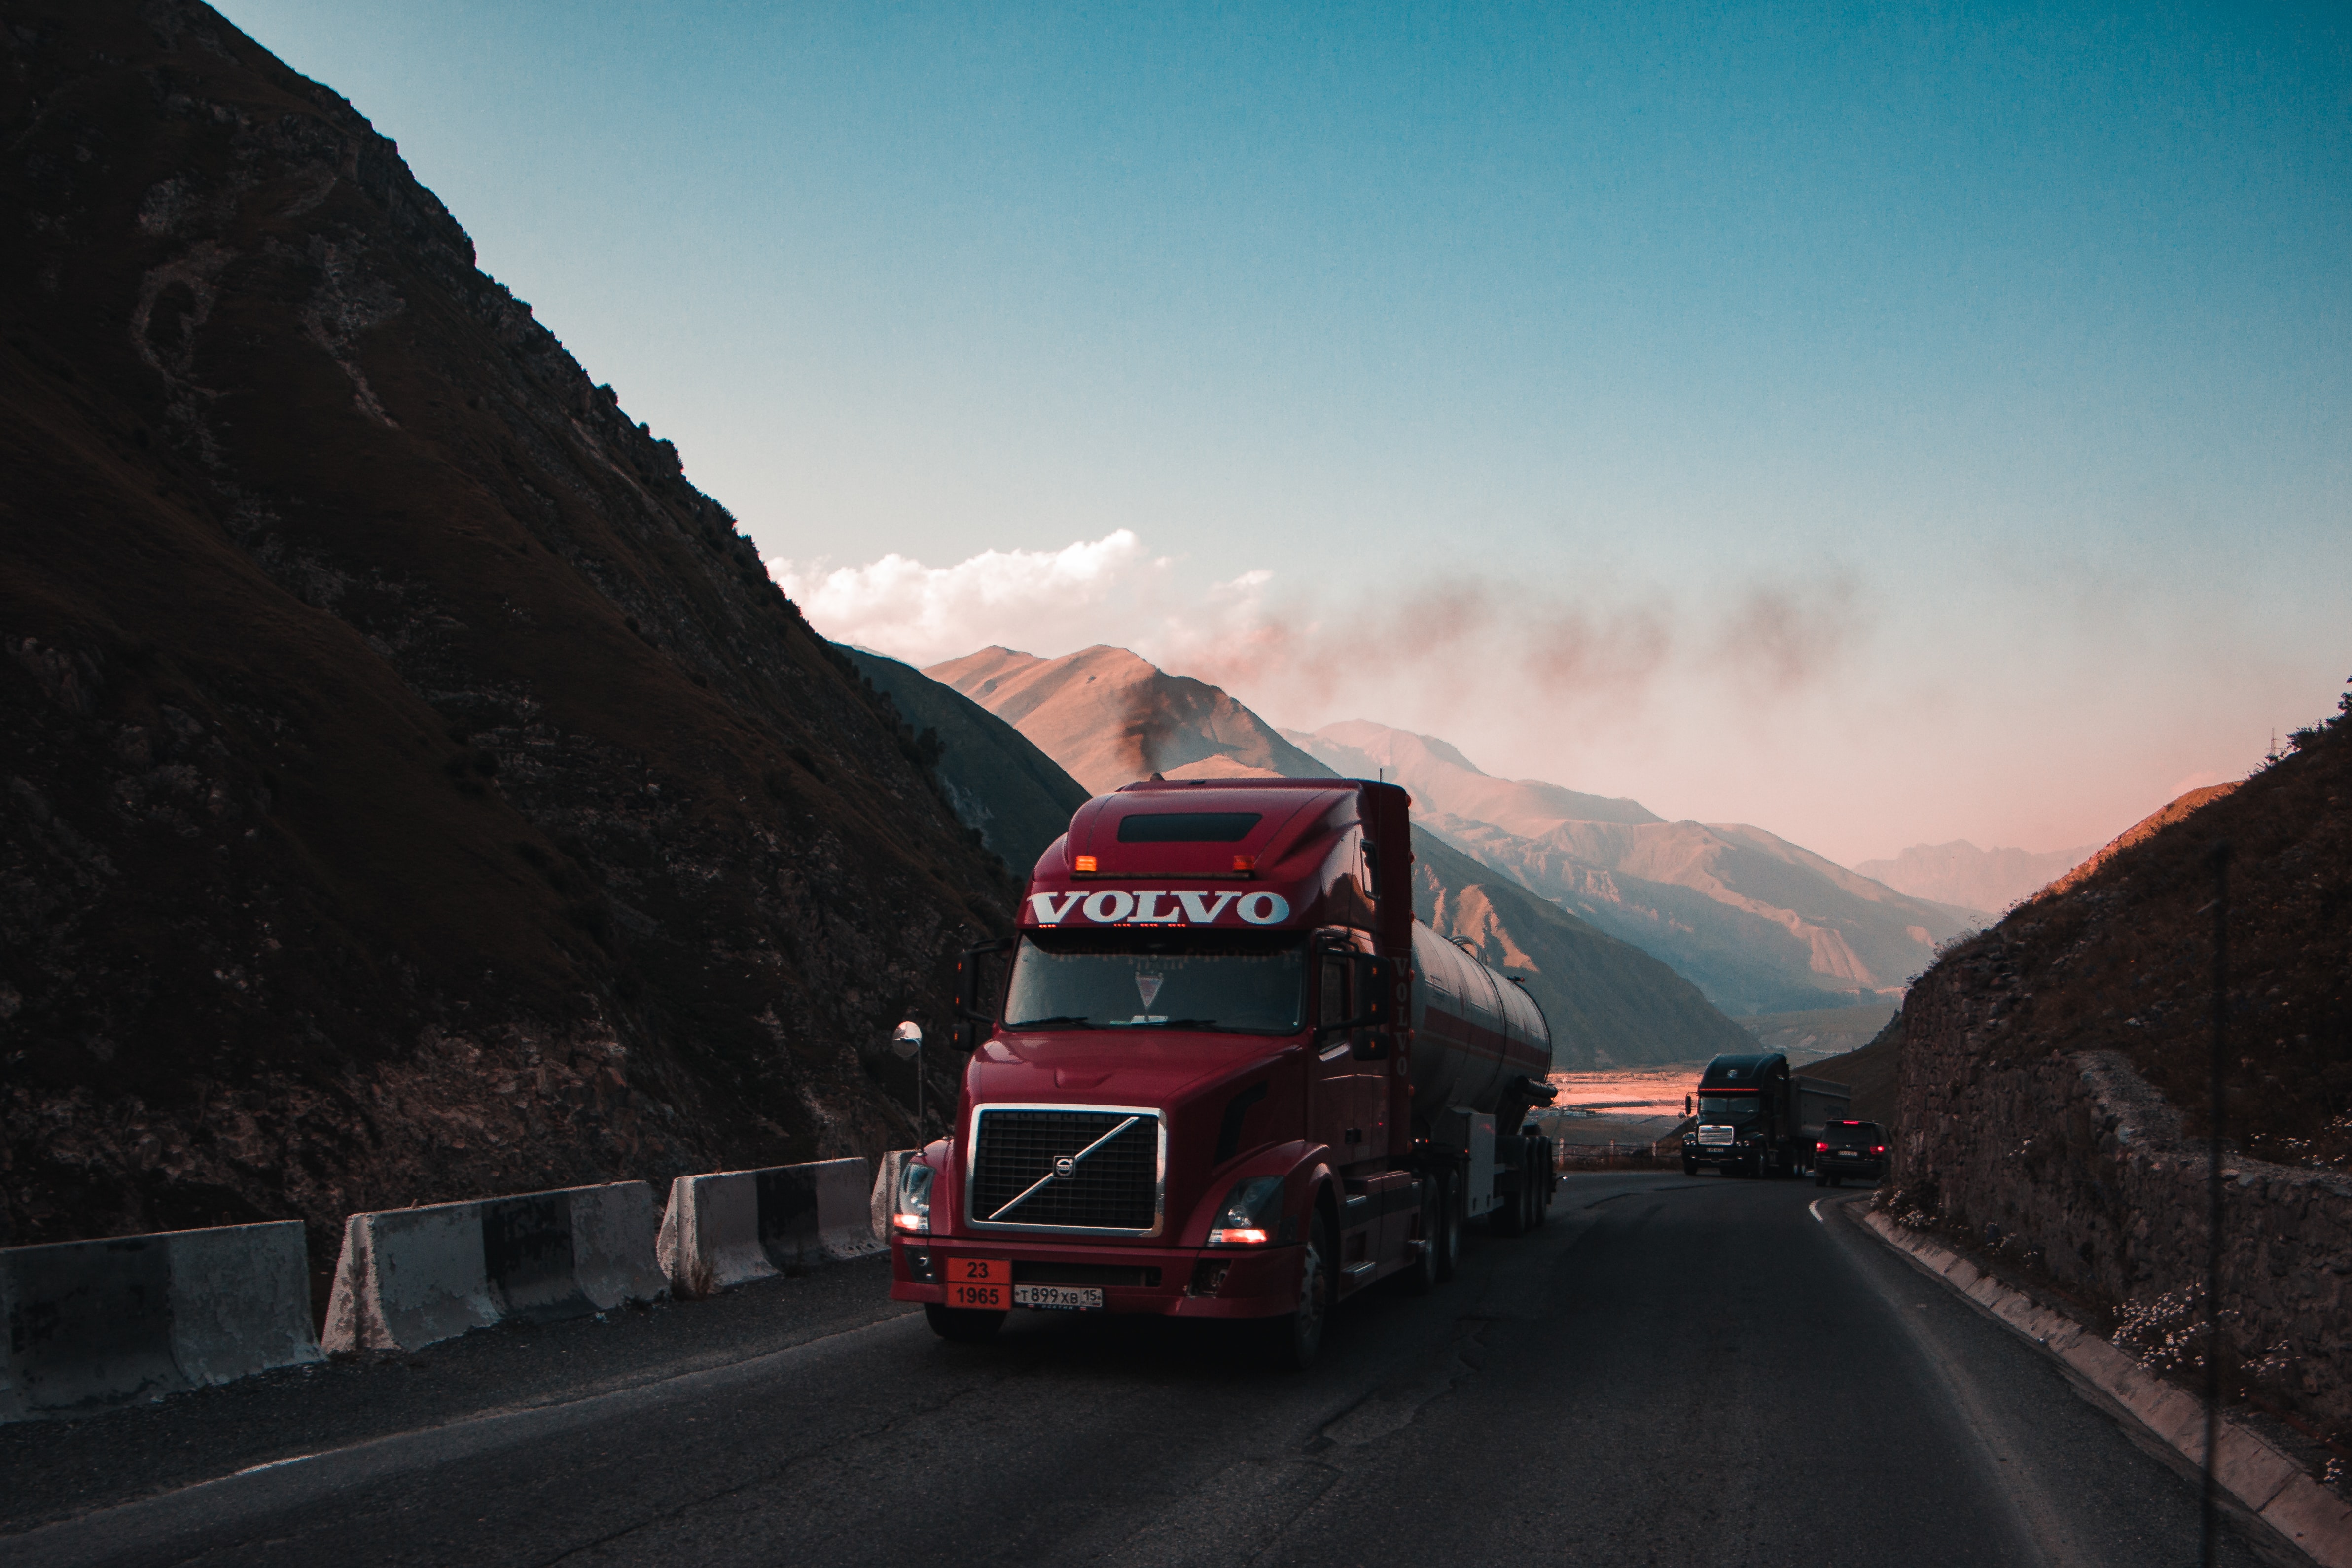 Red Volvo tanker truck on mountain pass; image by Jairph P, via Unsplash.com.